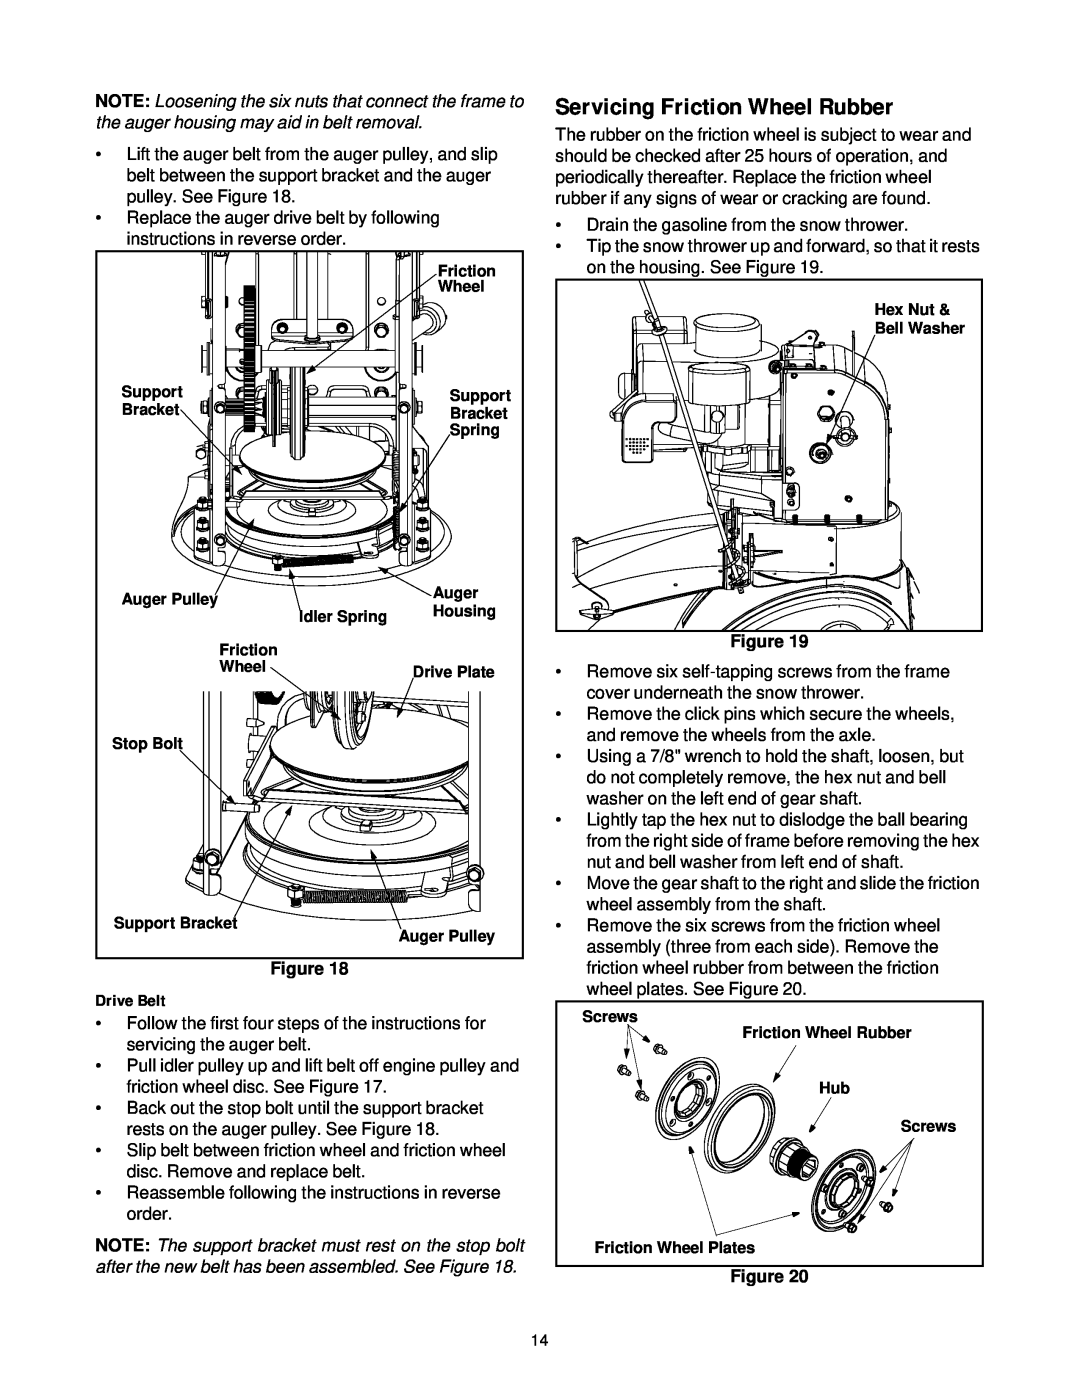 Bolens 550, 750 manual Servicing Friction Wheel Rubber, Drive Belt, Figure 